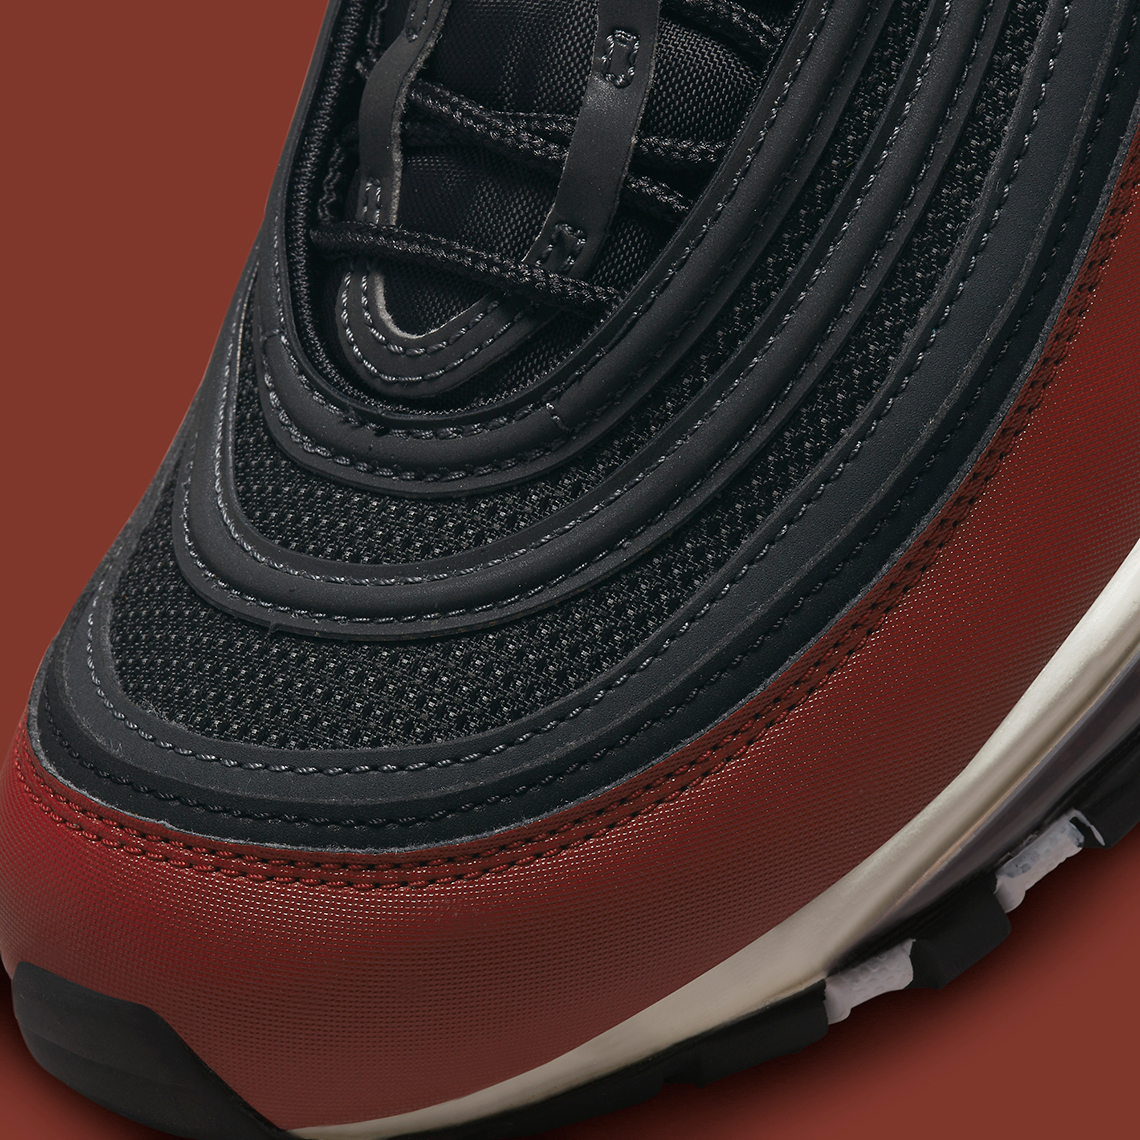 Nike nike huarache le 2012 interior door size Red Black Dq3955 600 4